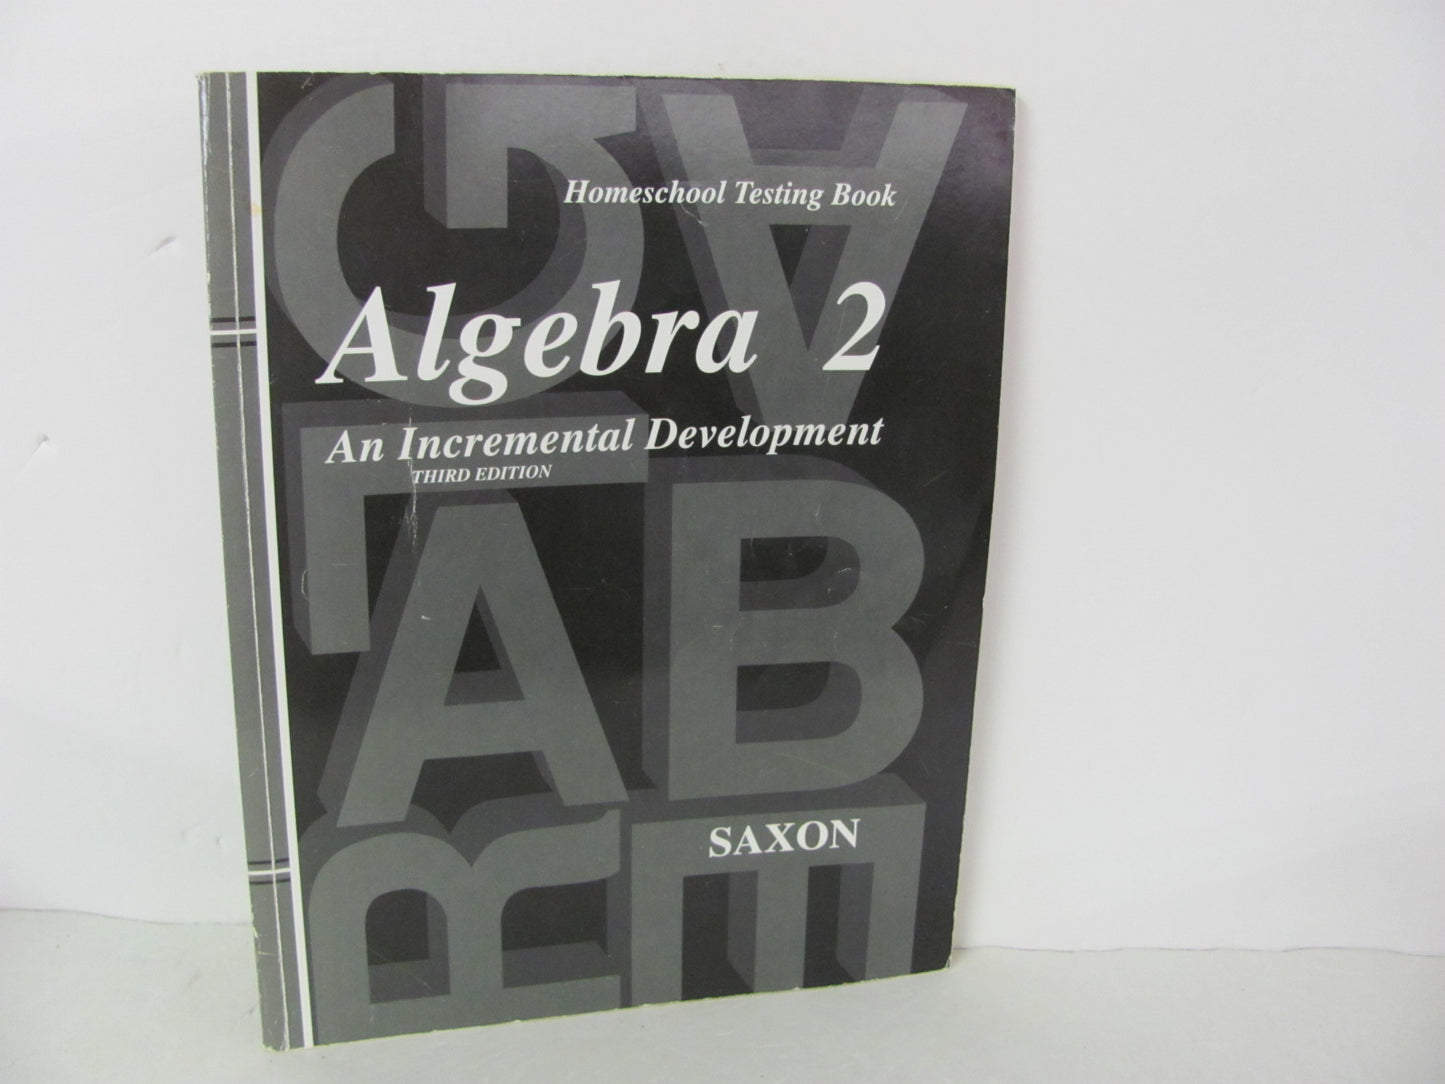 Algebra 2 Saxon Tests  Pre-Owned High School Mathematics Textbooks